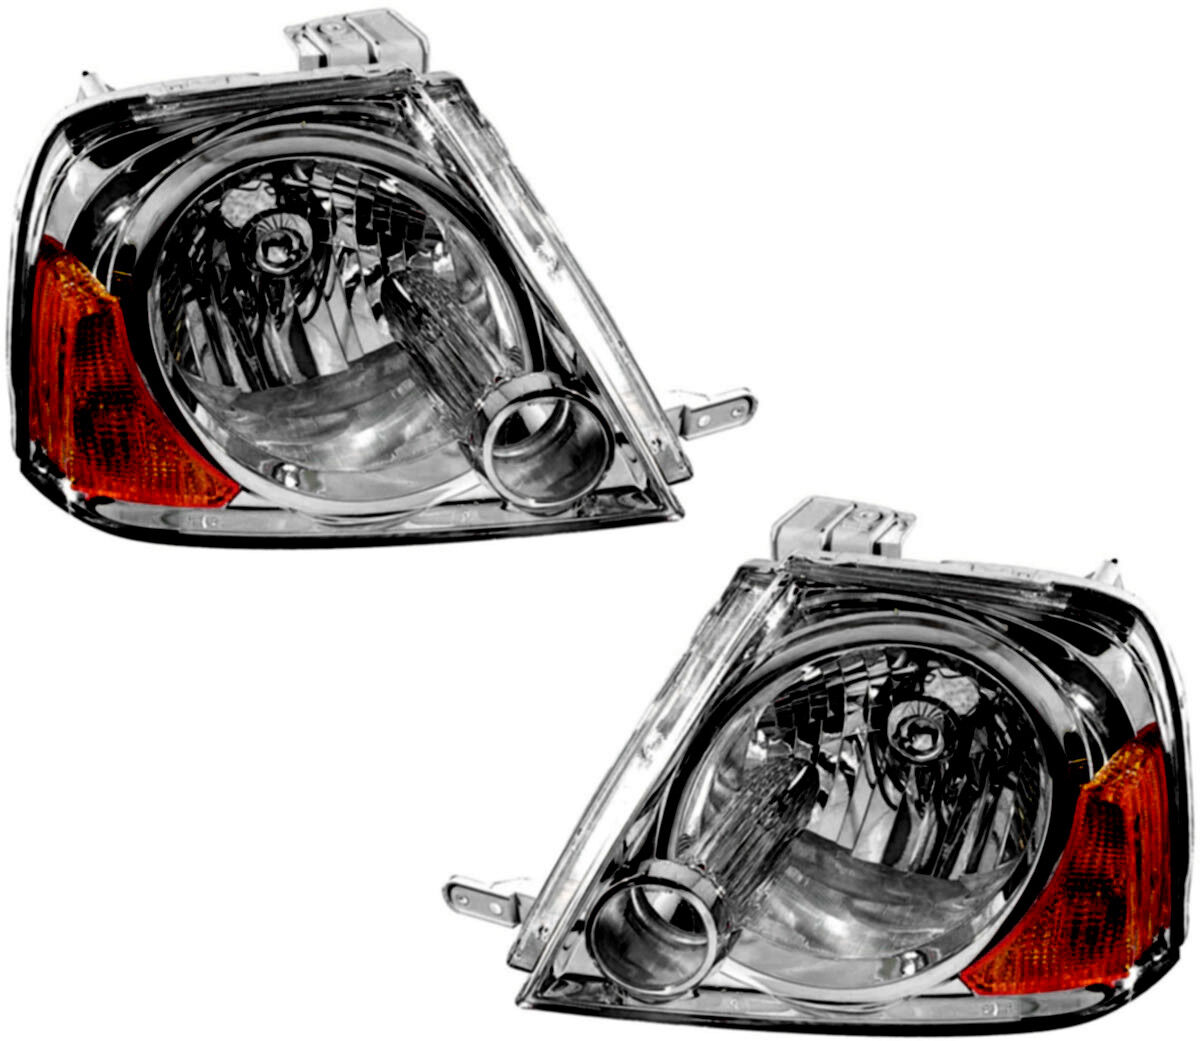 Headlights Headlamps Left & Right Pair Set for 04 05 06 Suzuki XL-7